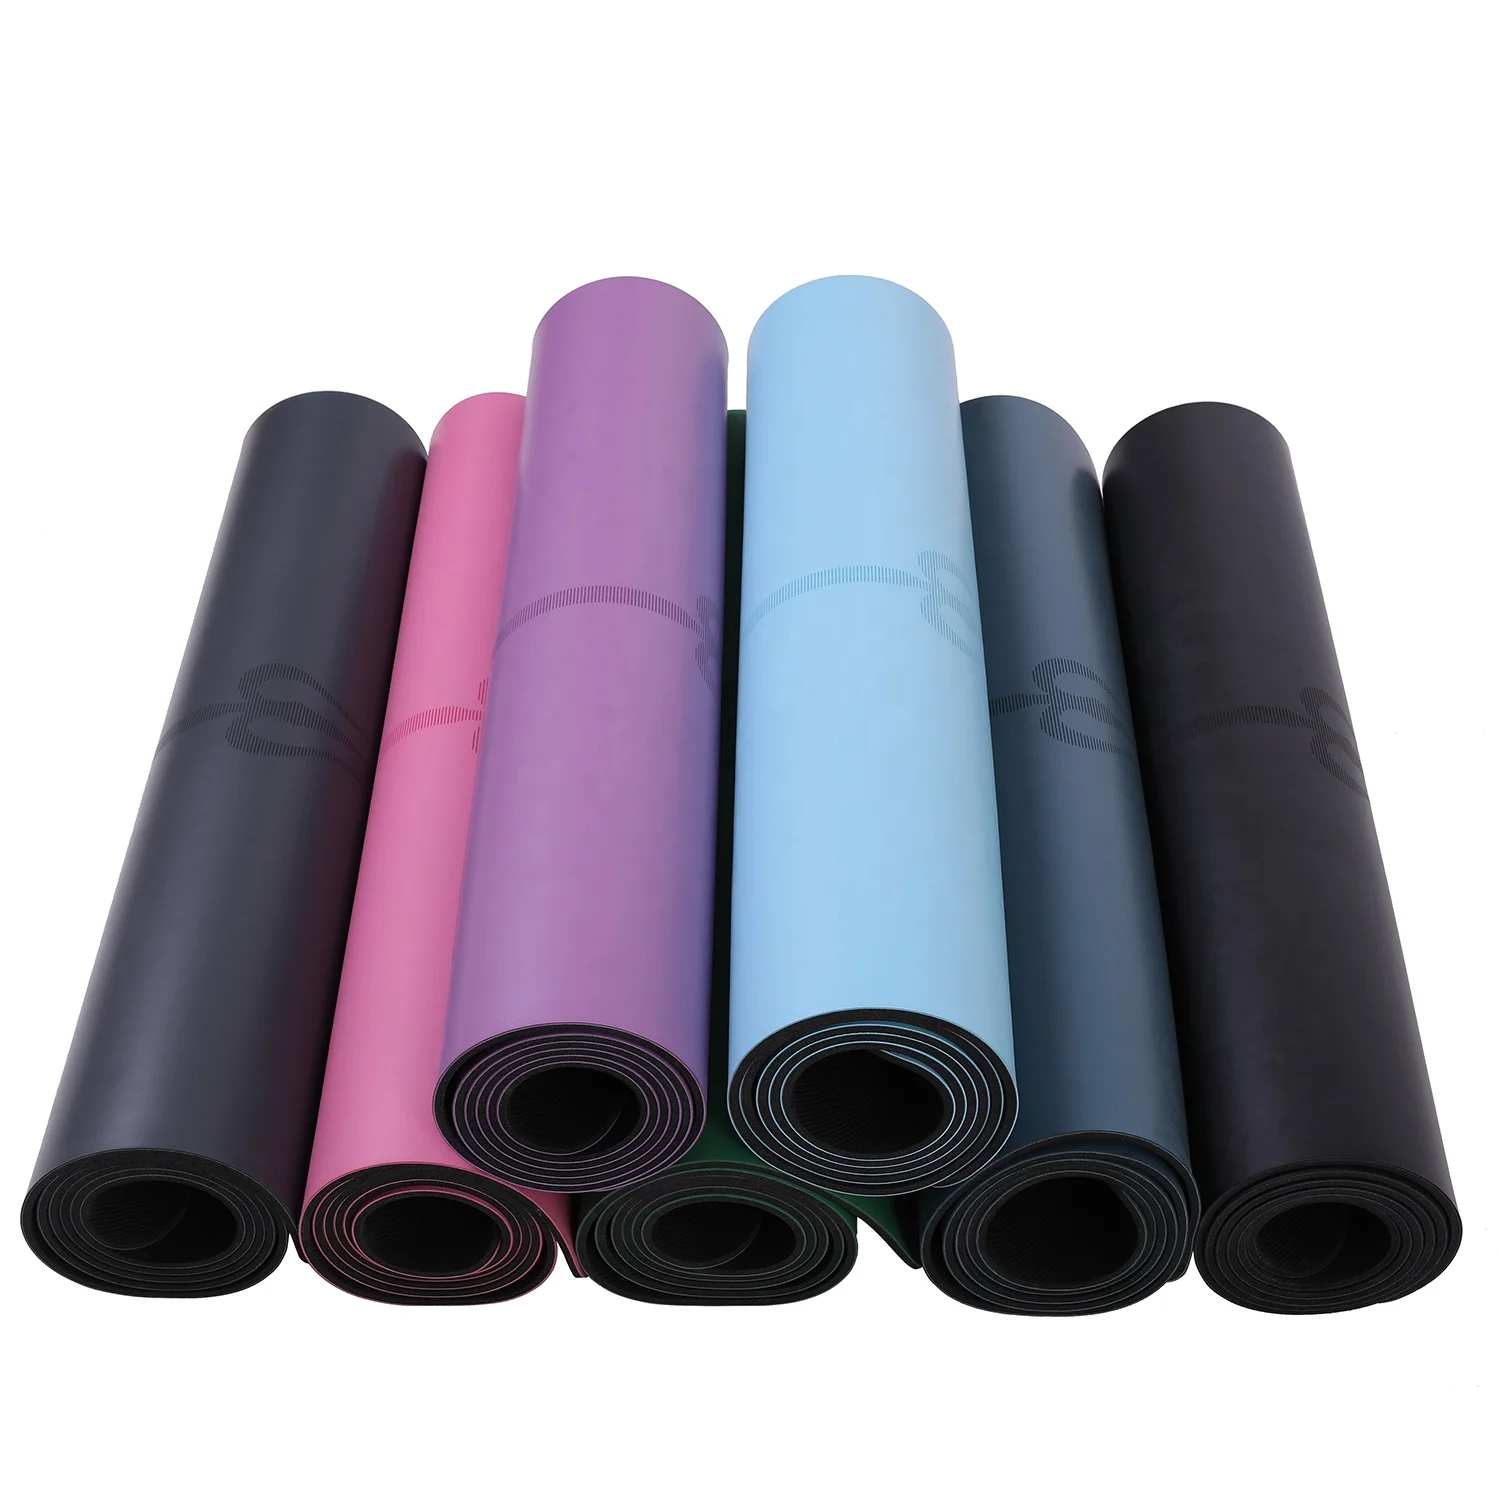 

7 Colors 1830*680*5mm Double Layer Anti Slip Polyurethane Yoga Mat PU Natural Rrubber Yoga Mat with Position Line, Black,purple,pink,l.blue,d.gray,d.blue,green